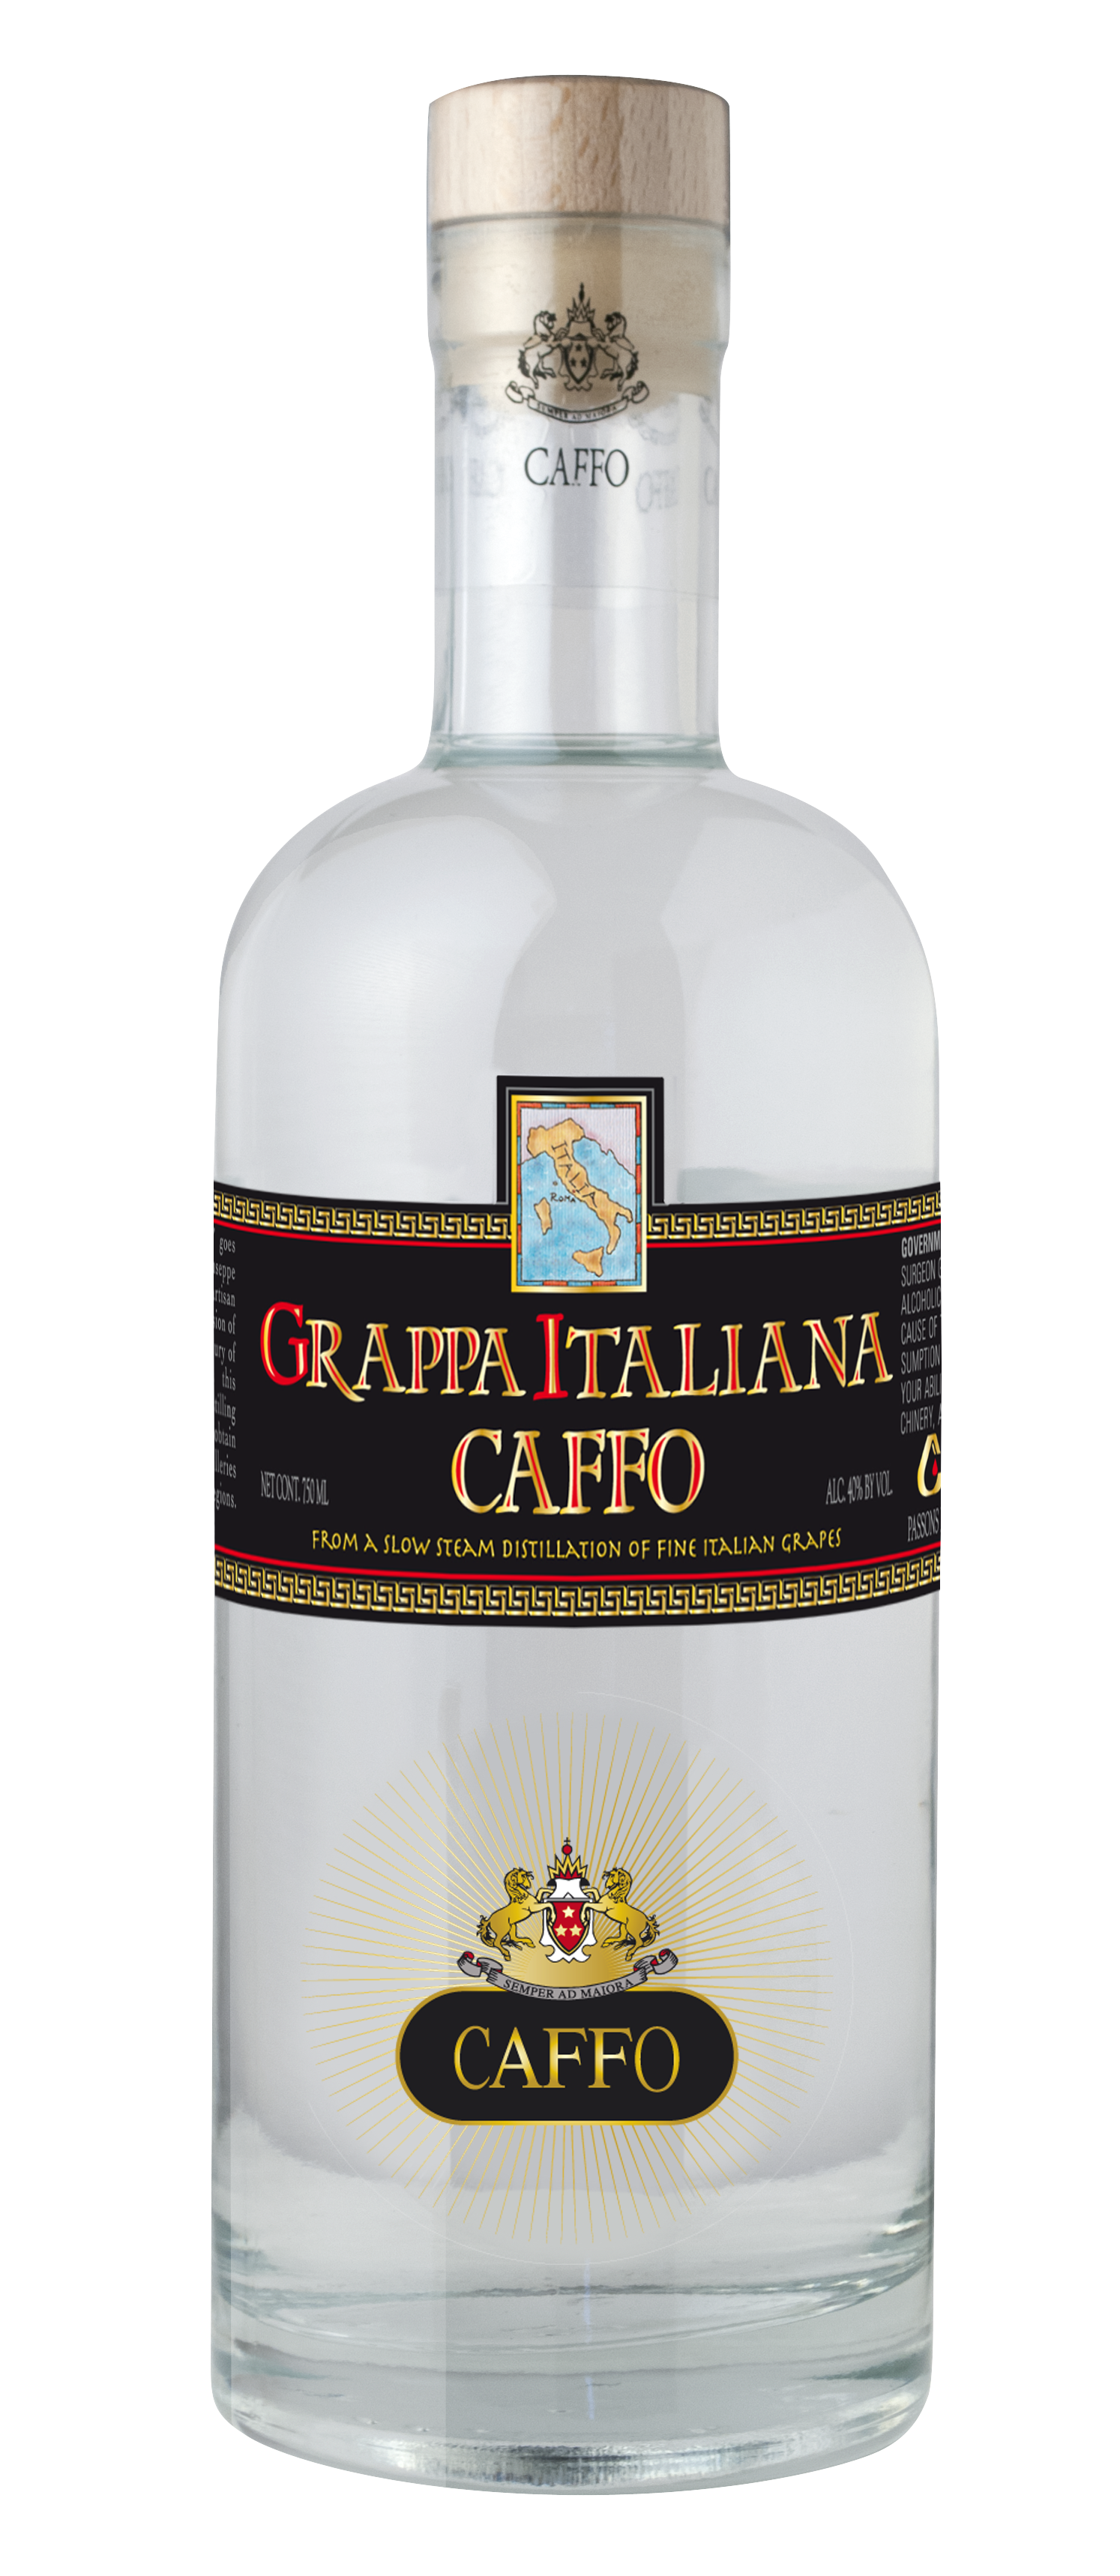 Grappa Italiana, Caffo - Spirits Skurnik Wines 